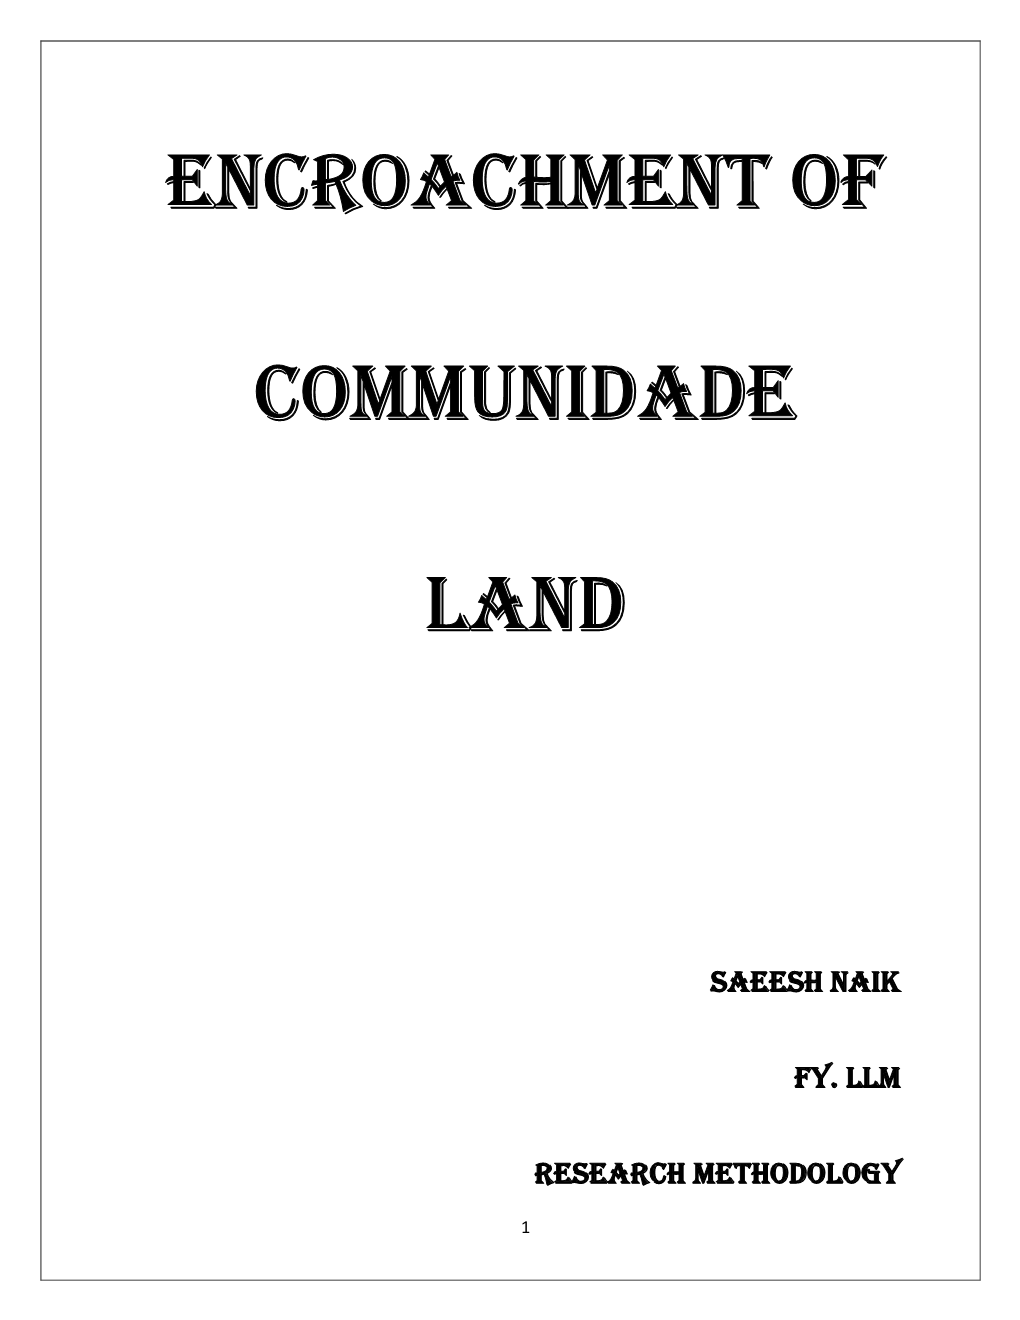 Encroachment of Communidade Lands?